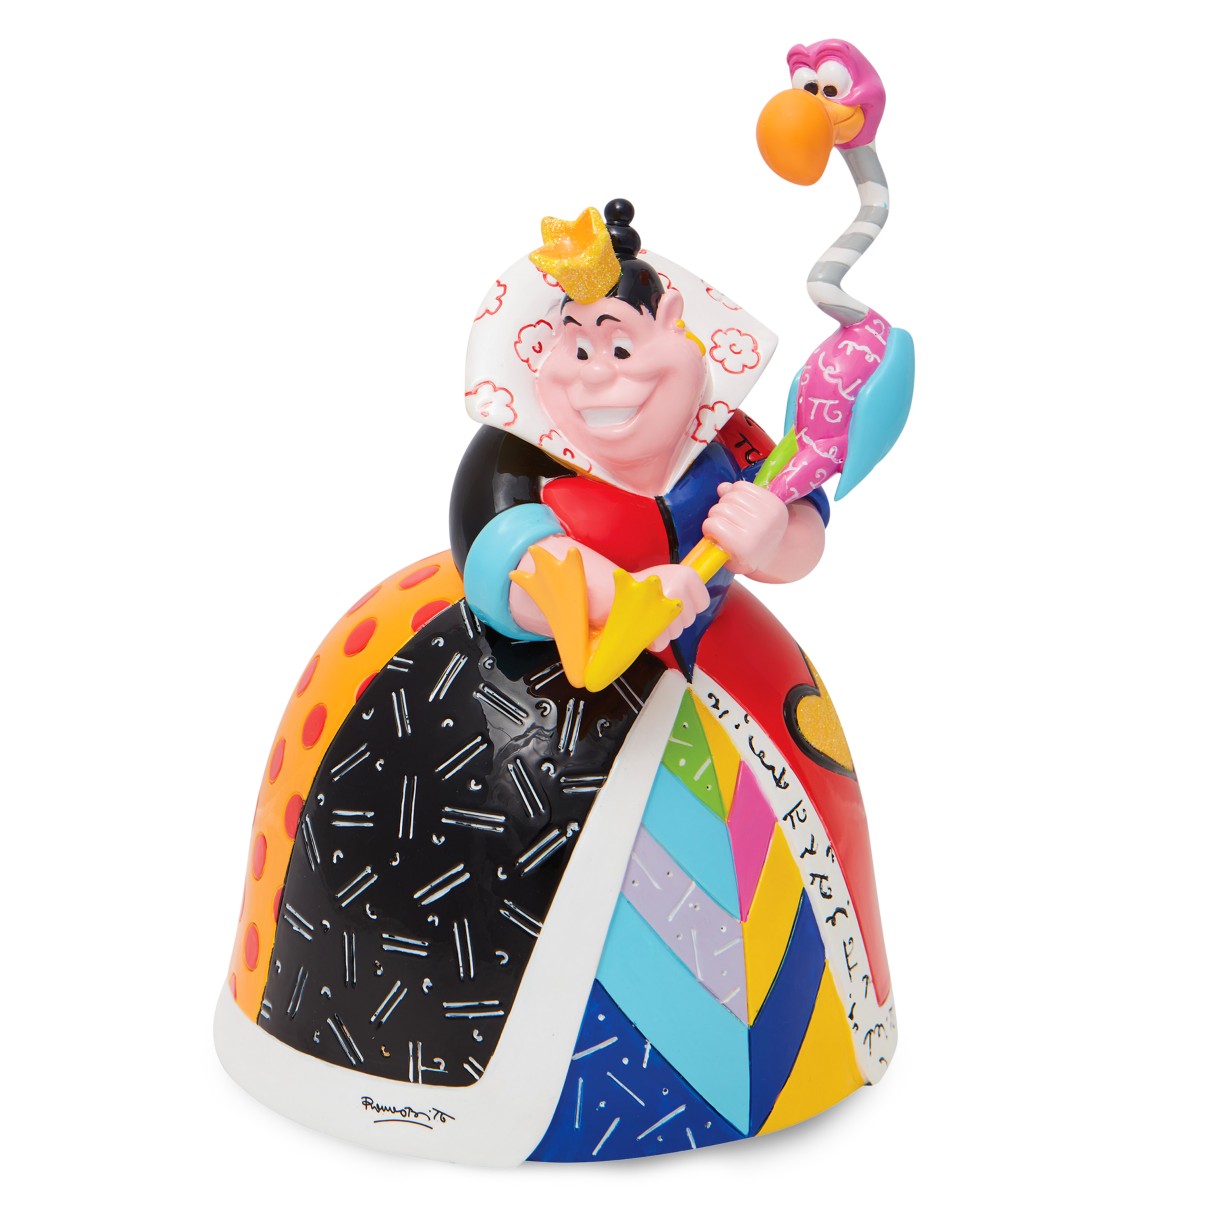 Queen of Hearts Figure by Britto – Alice in Wonderland